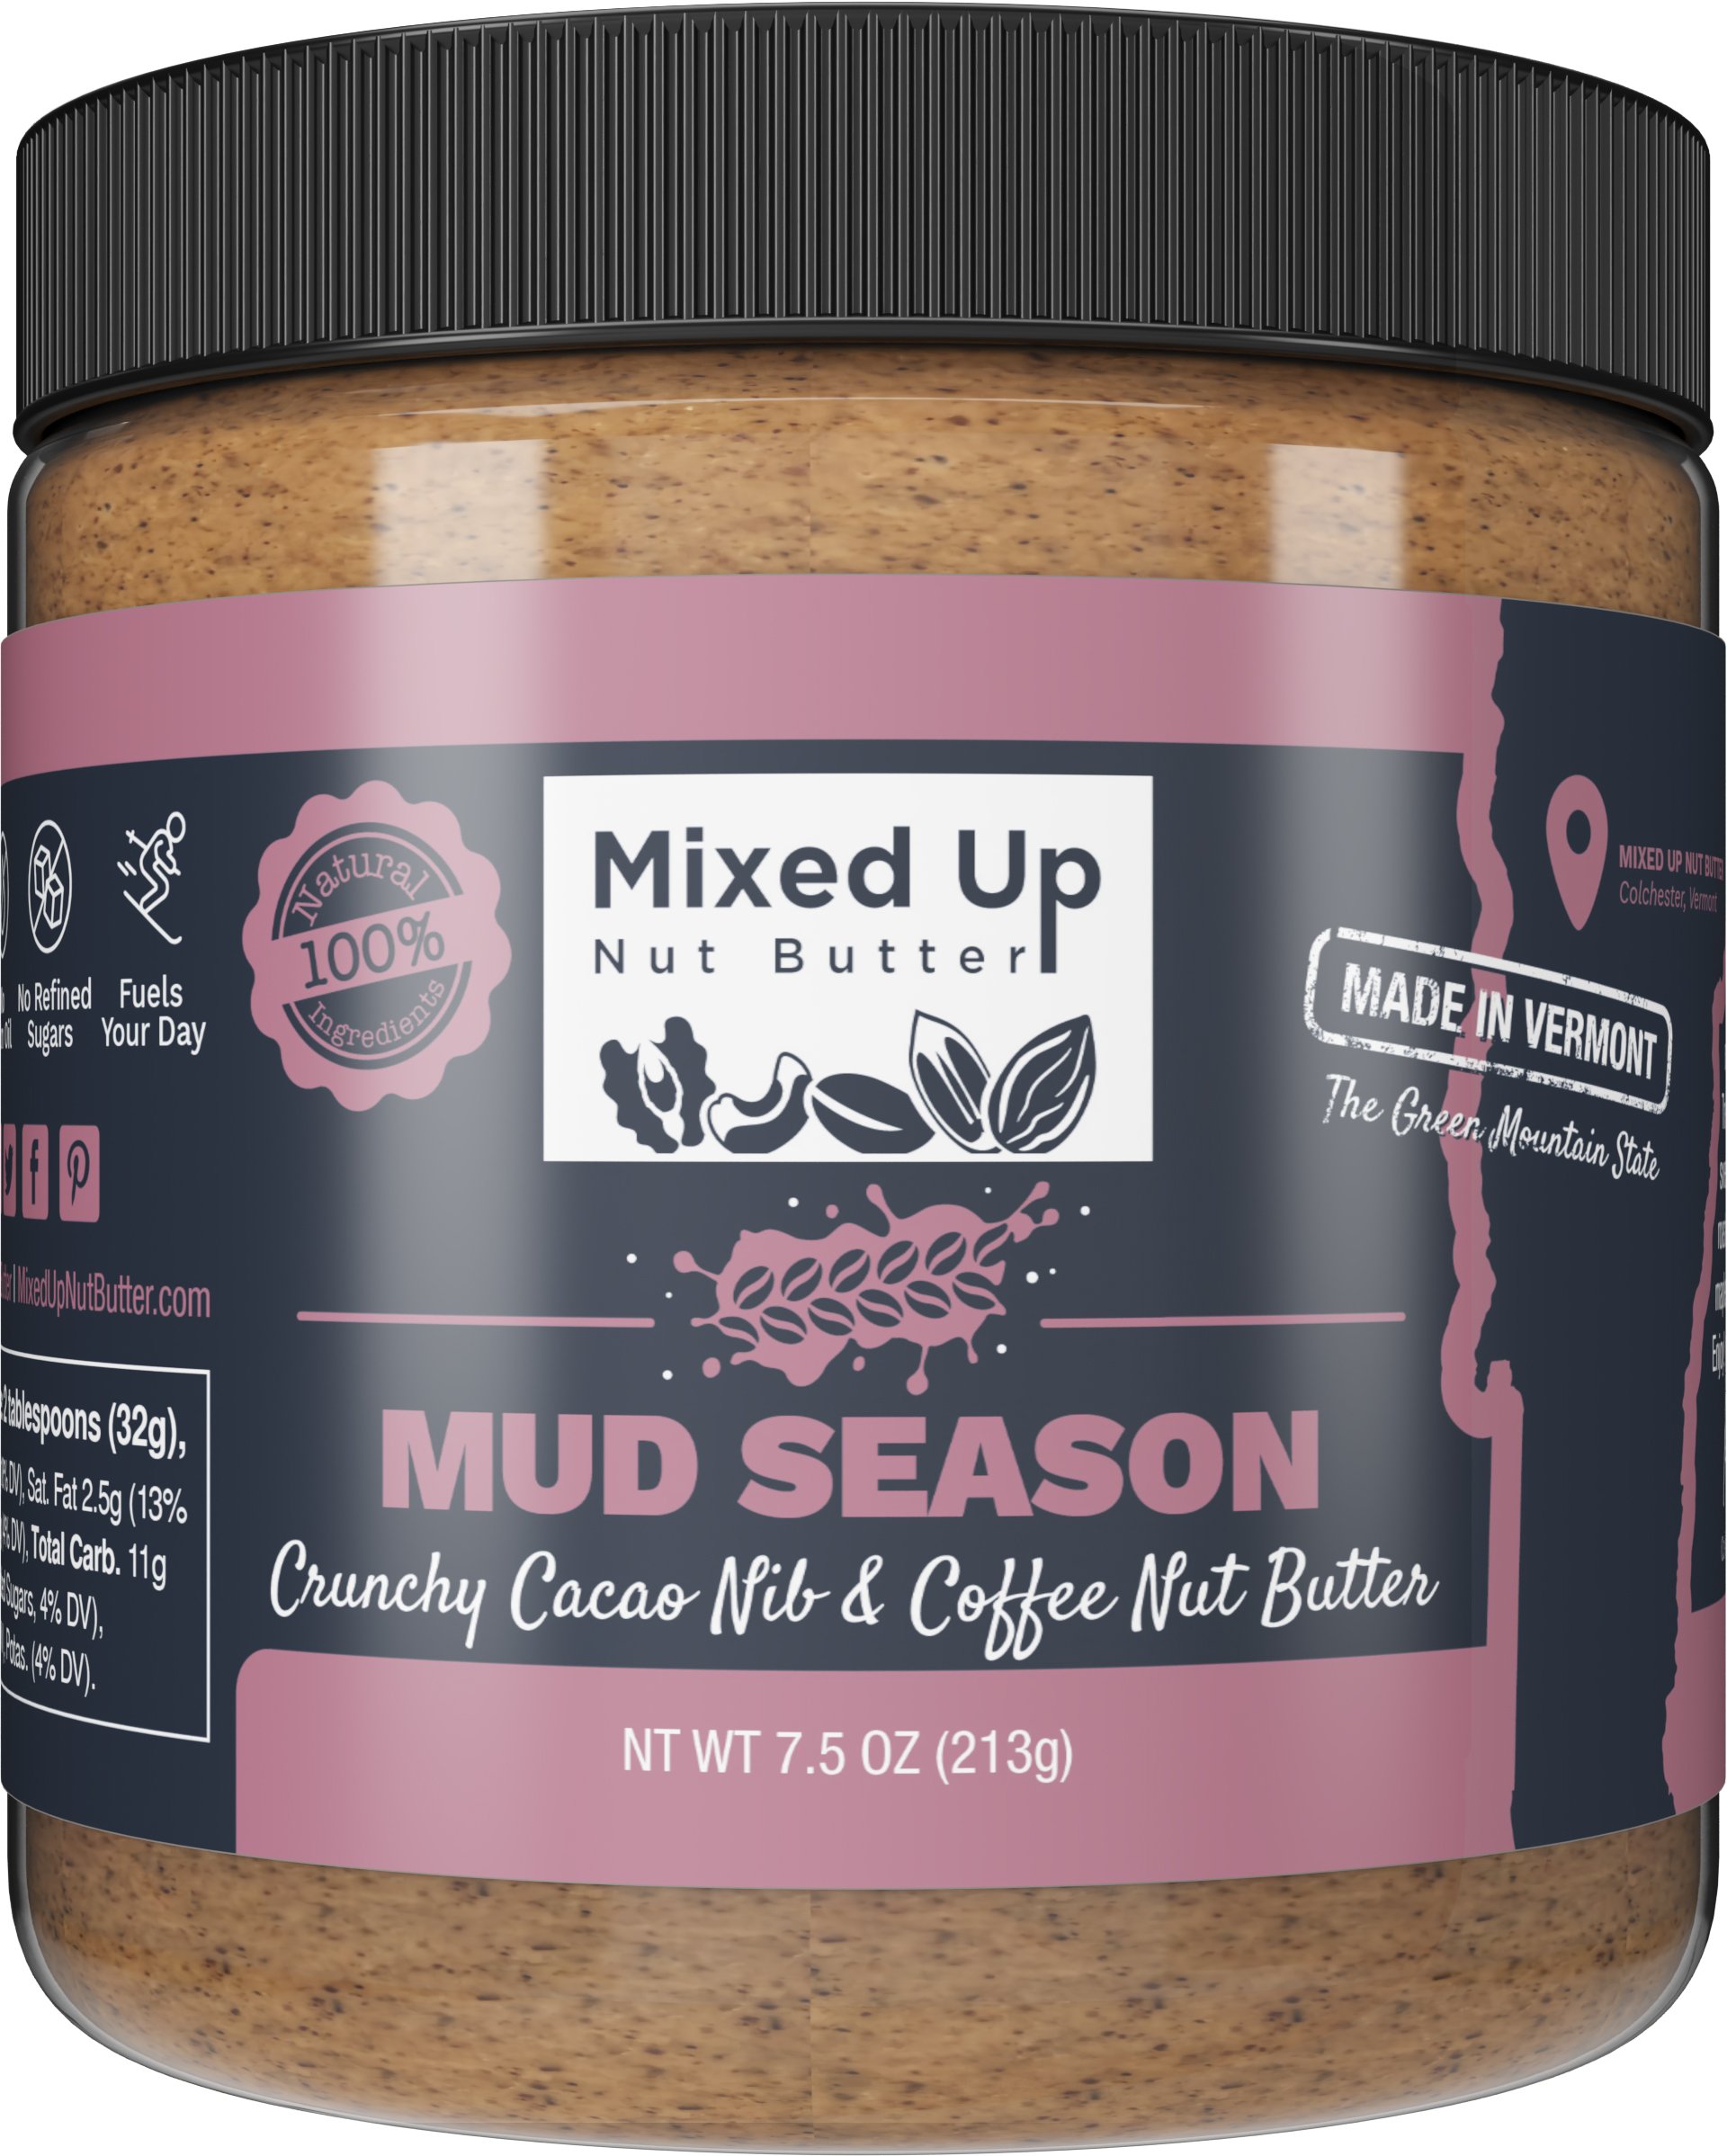 Mixed_Up_Nut_Butter-75oz-Mud-Season_FRONT.jpg